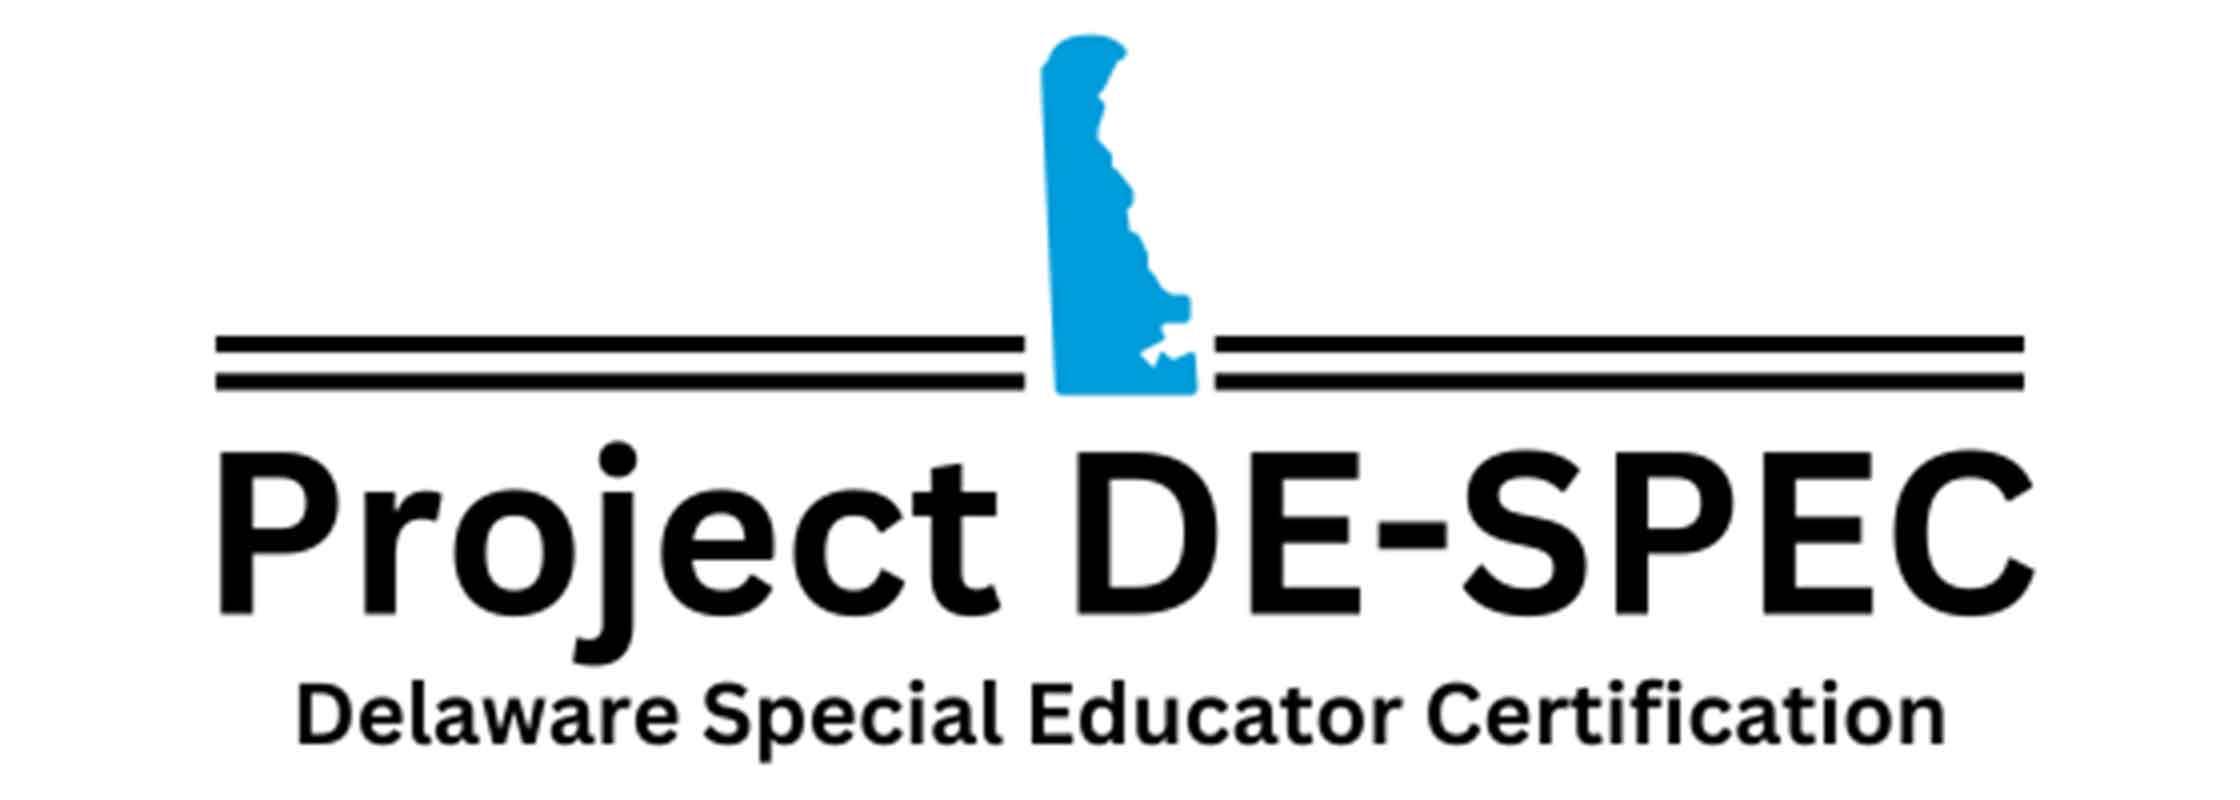 Project DE-SPEC logo